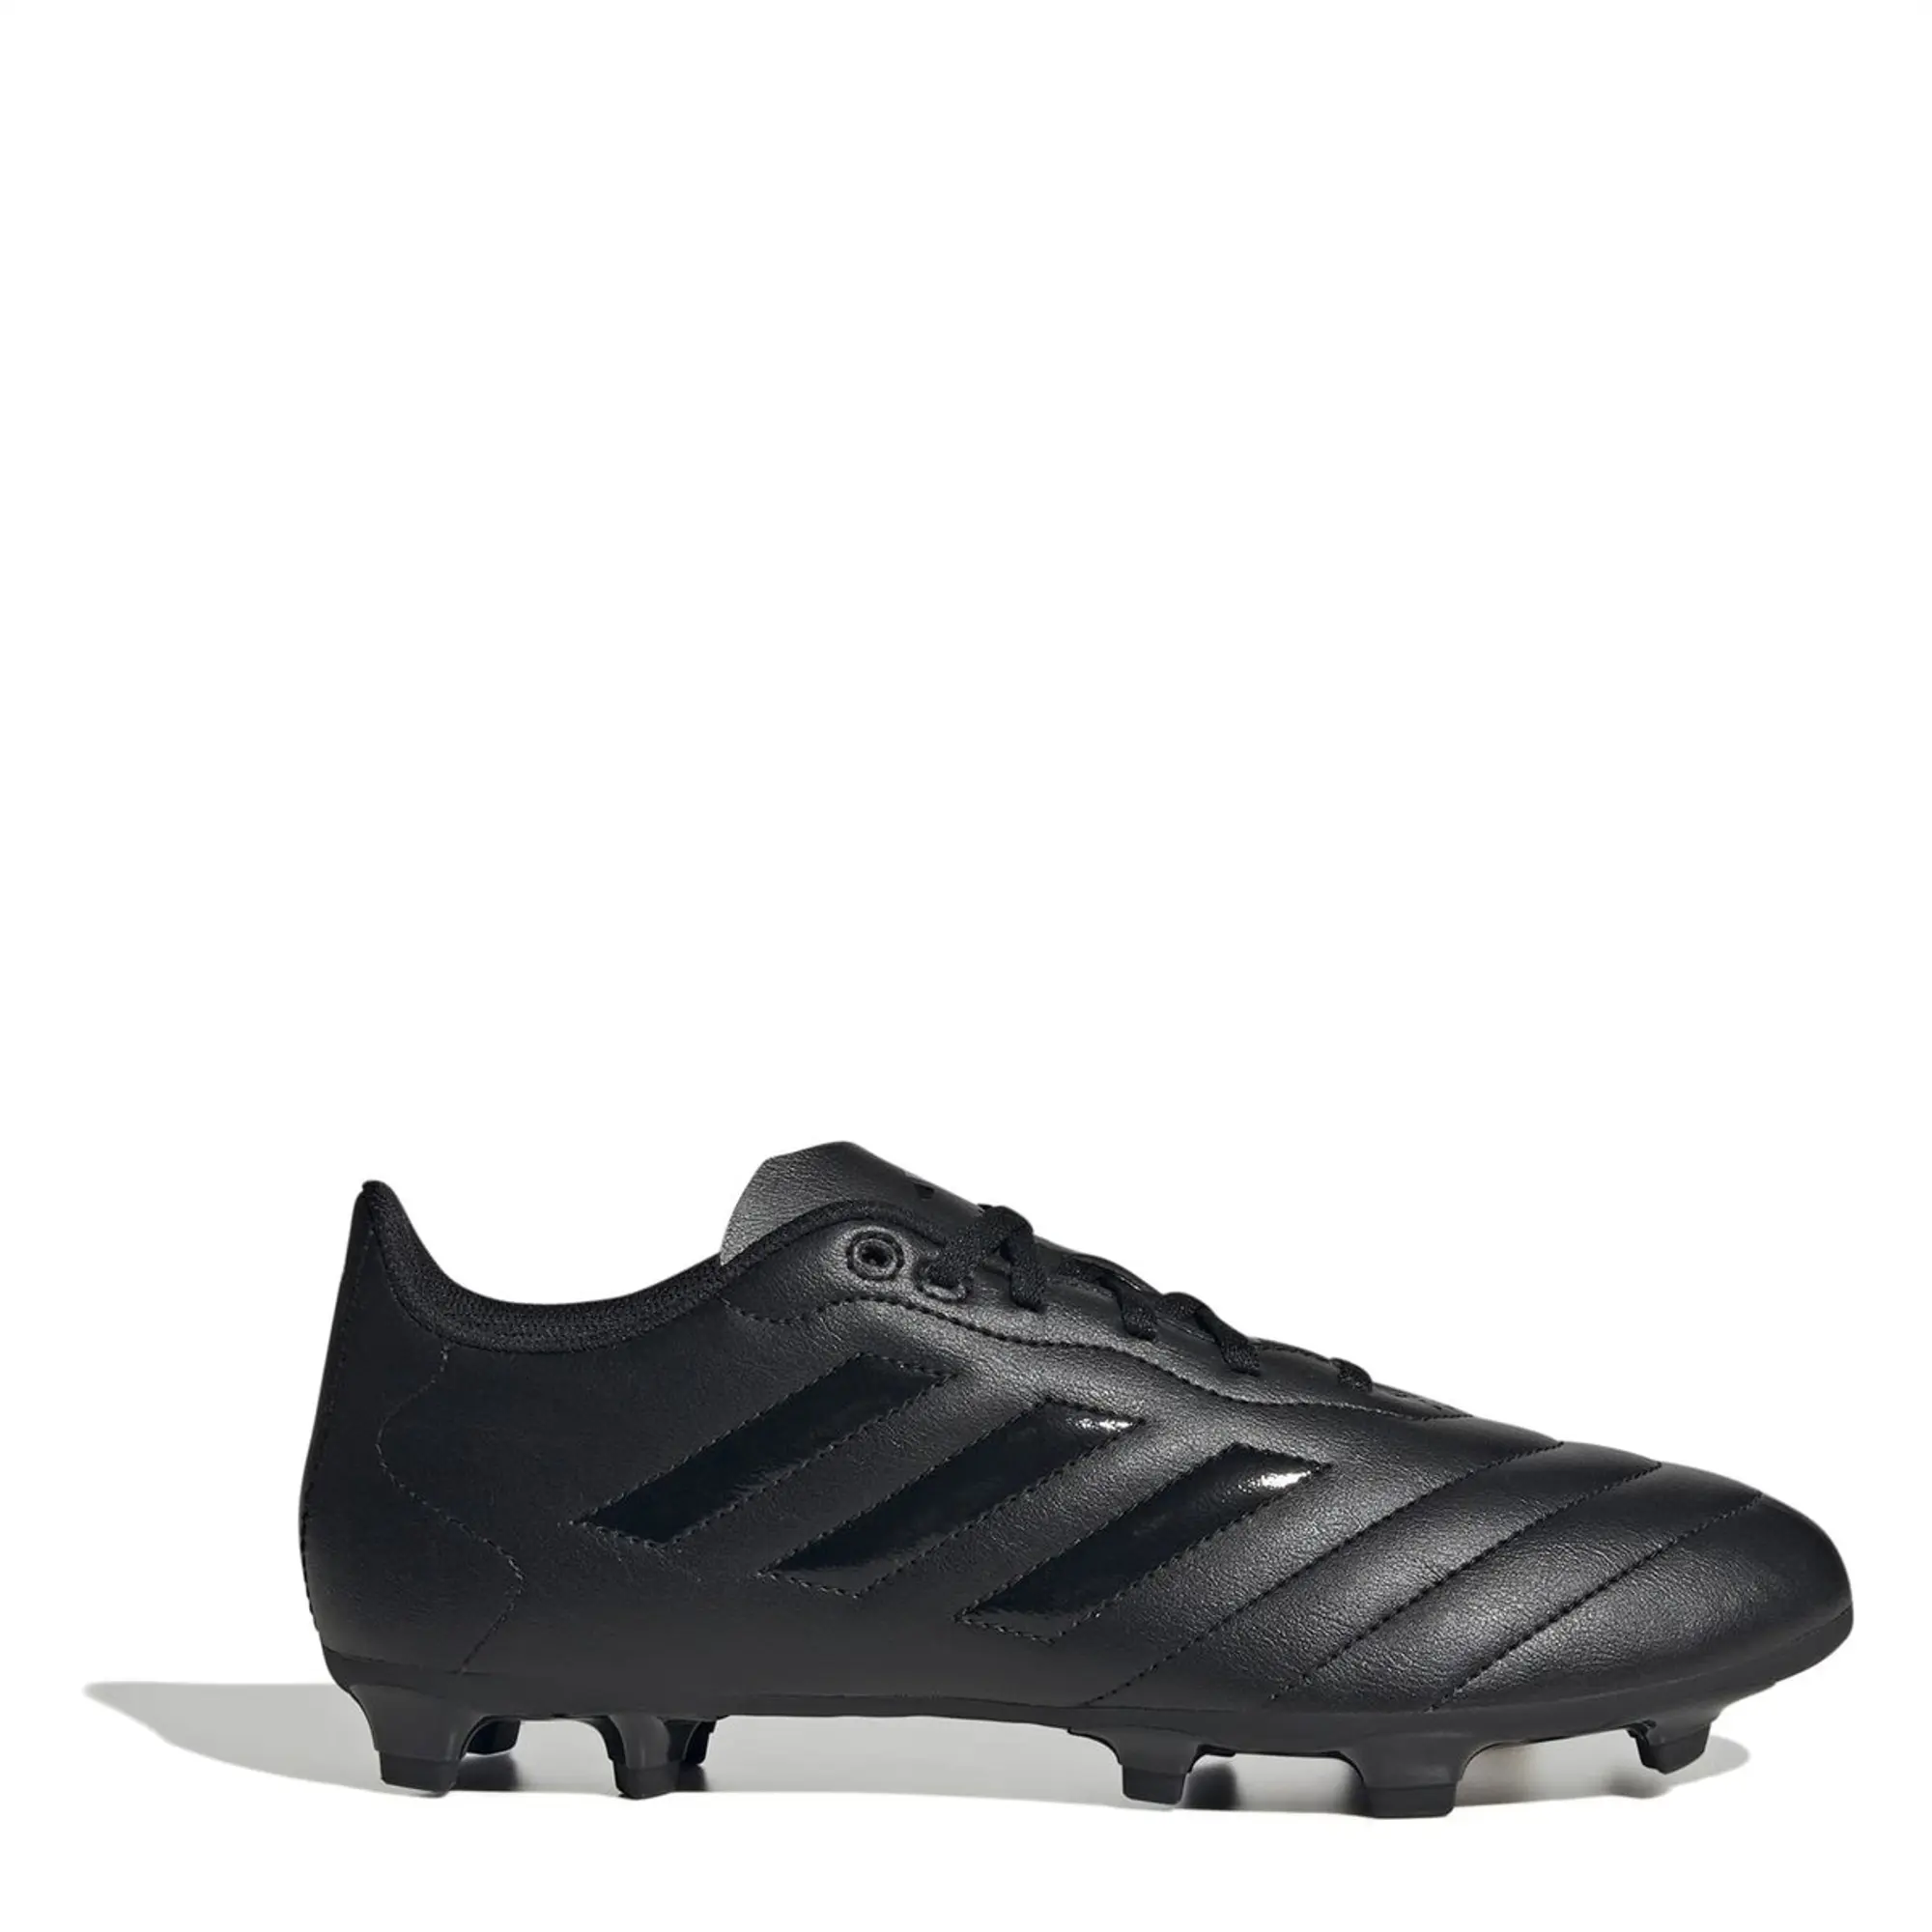 Adidas Goletto VIII Firm Ground Football Boots